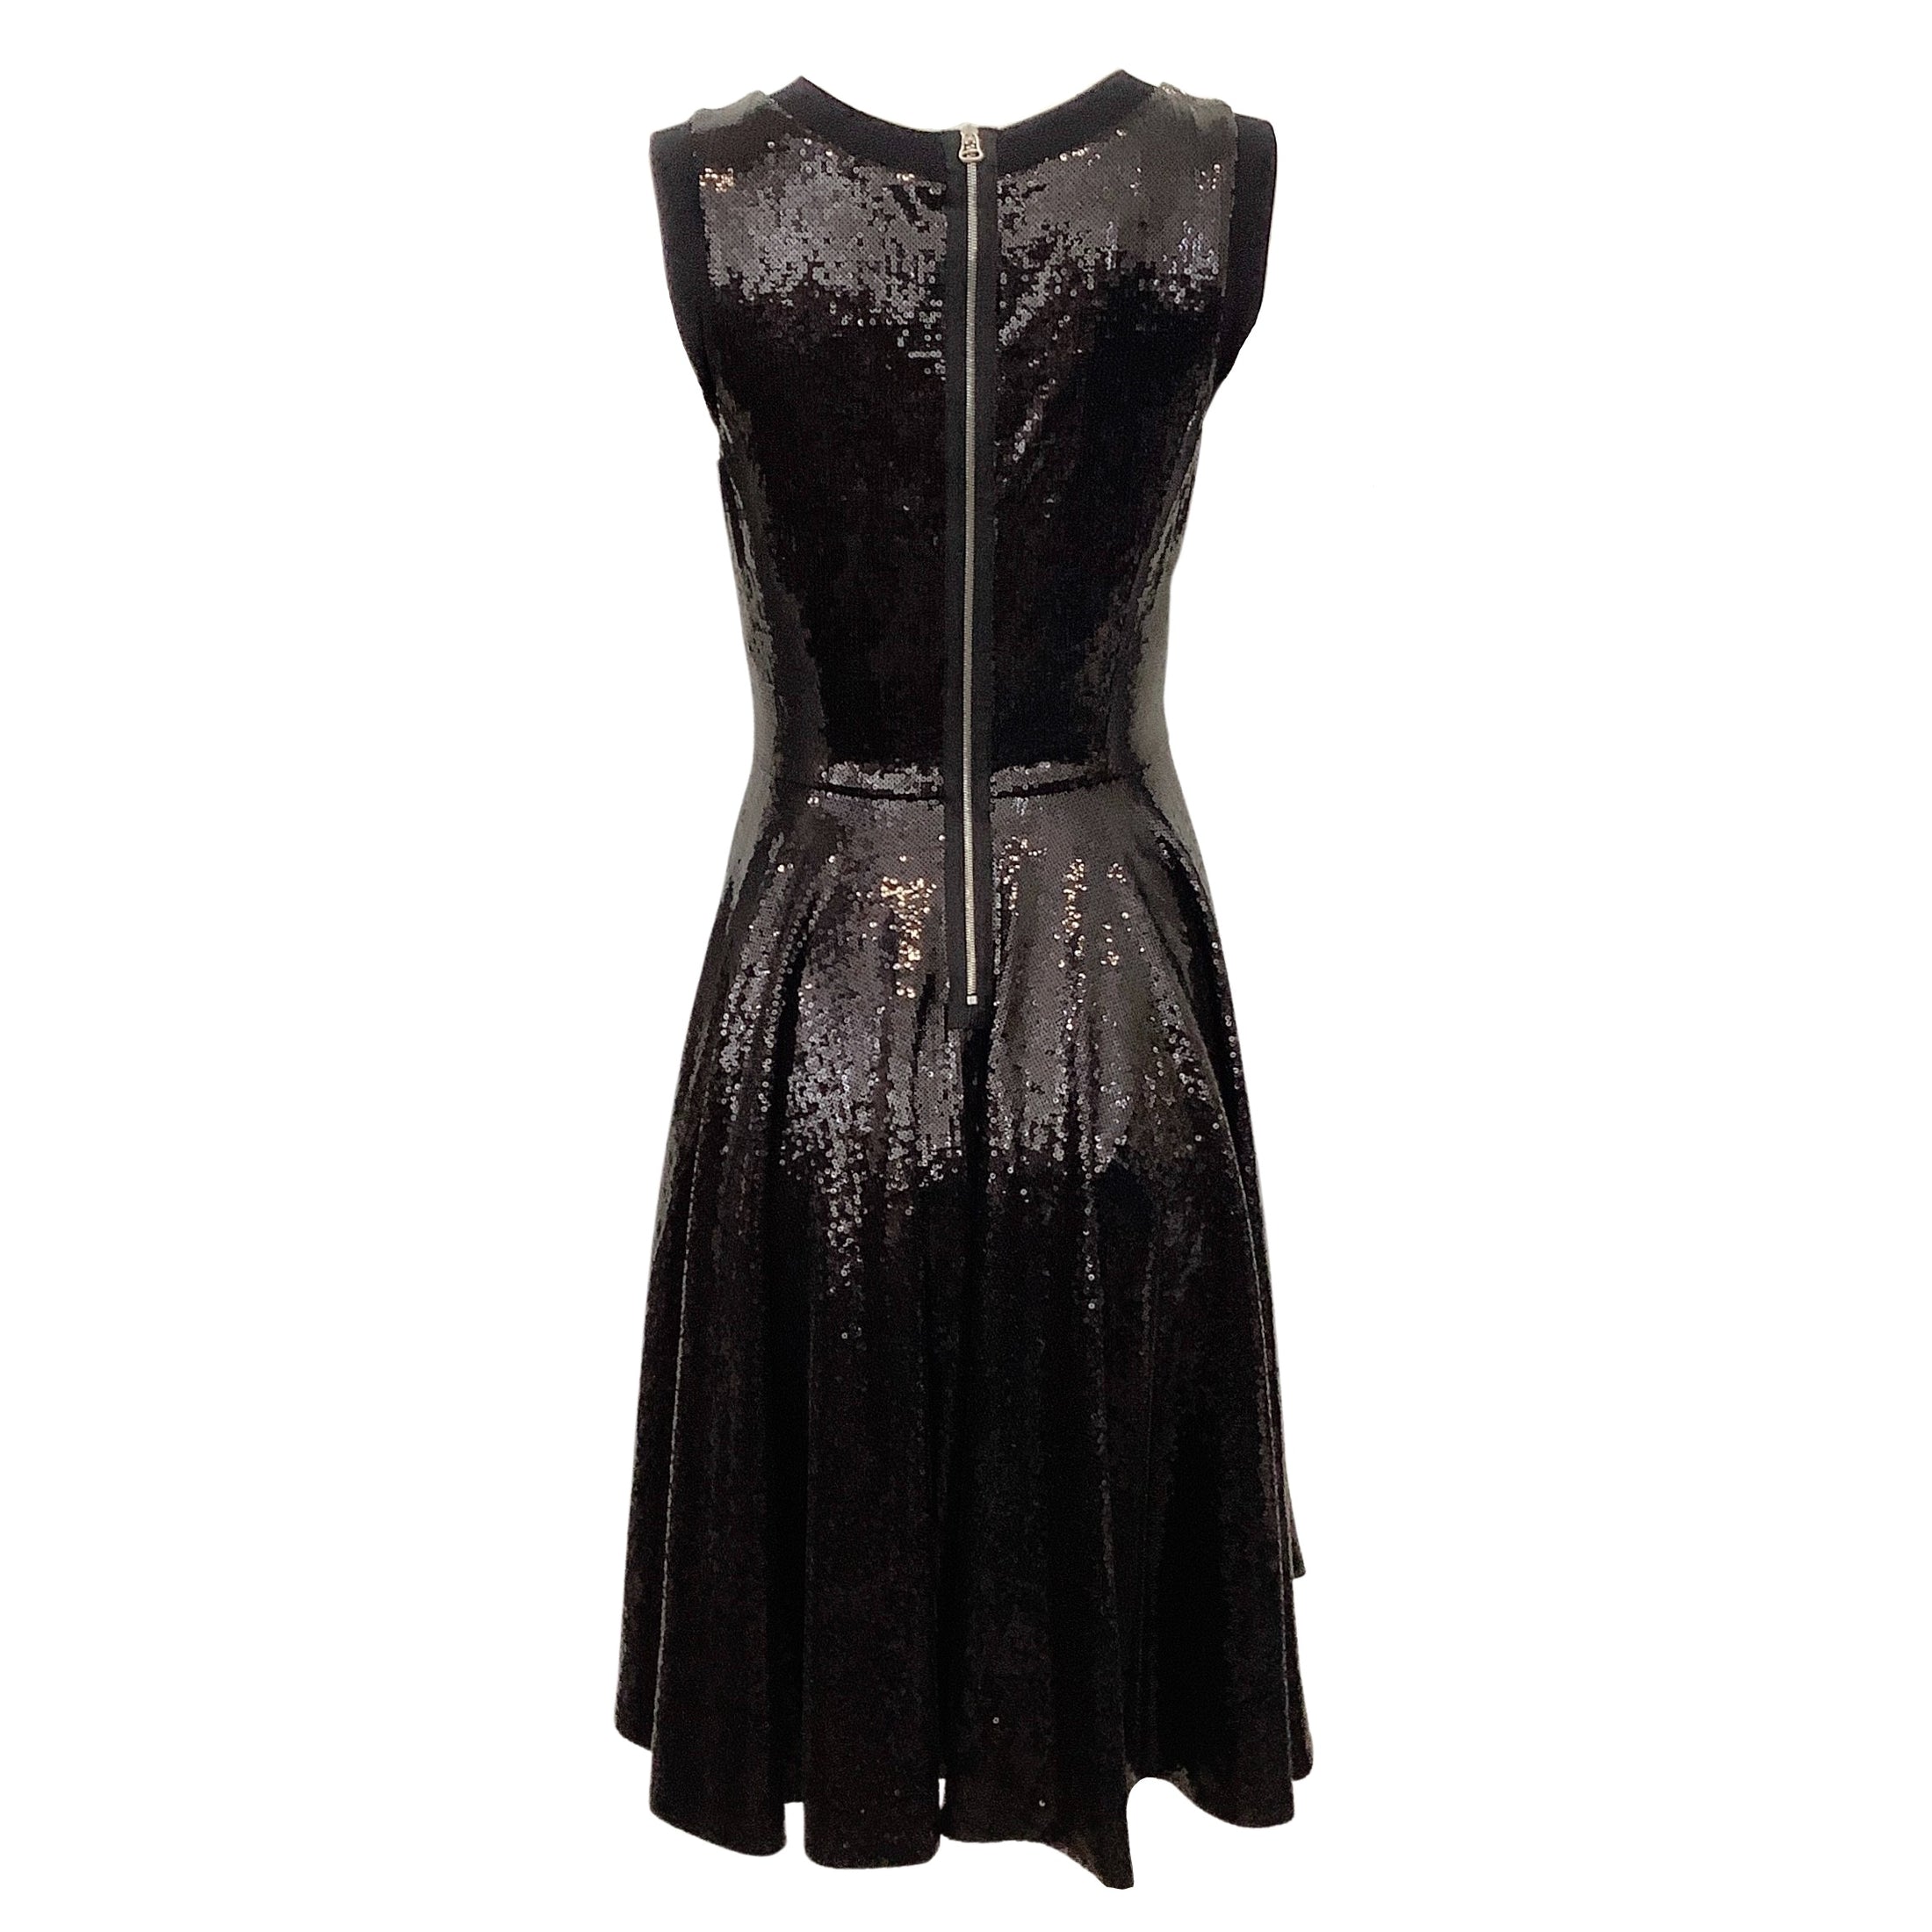 Twenty Cluny Black Sequined Sleeveless Dress